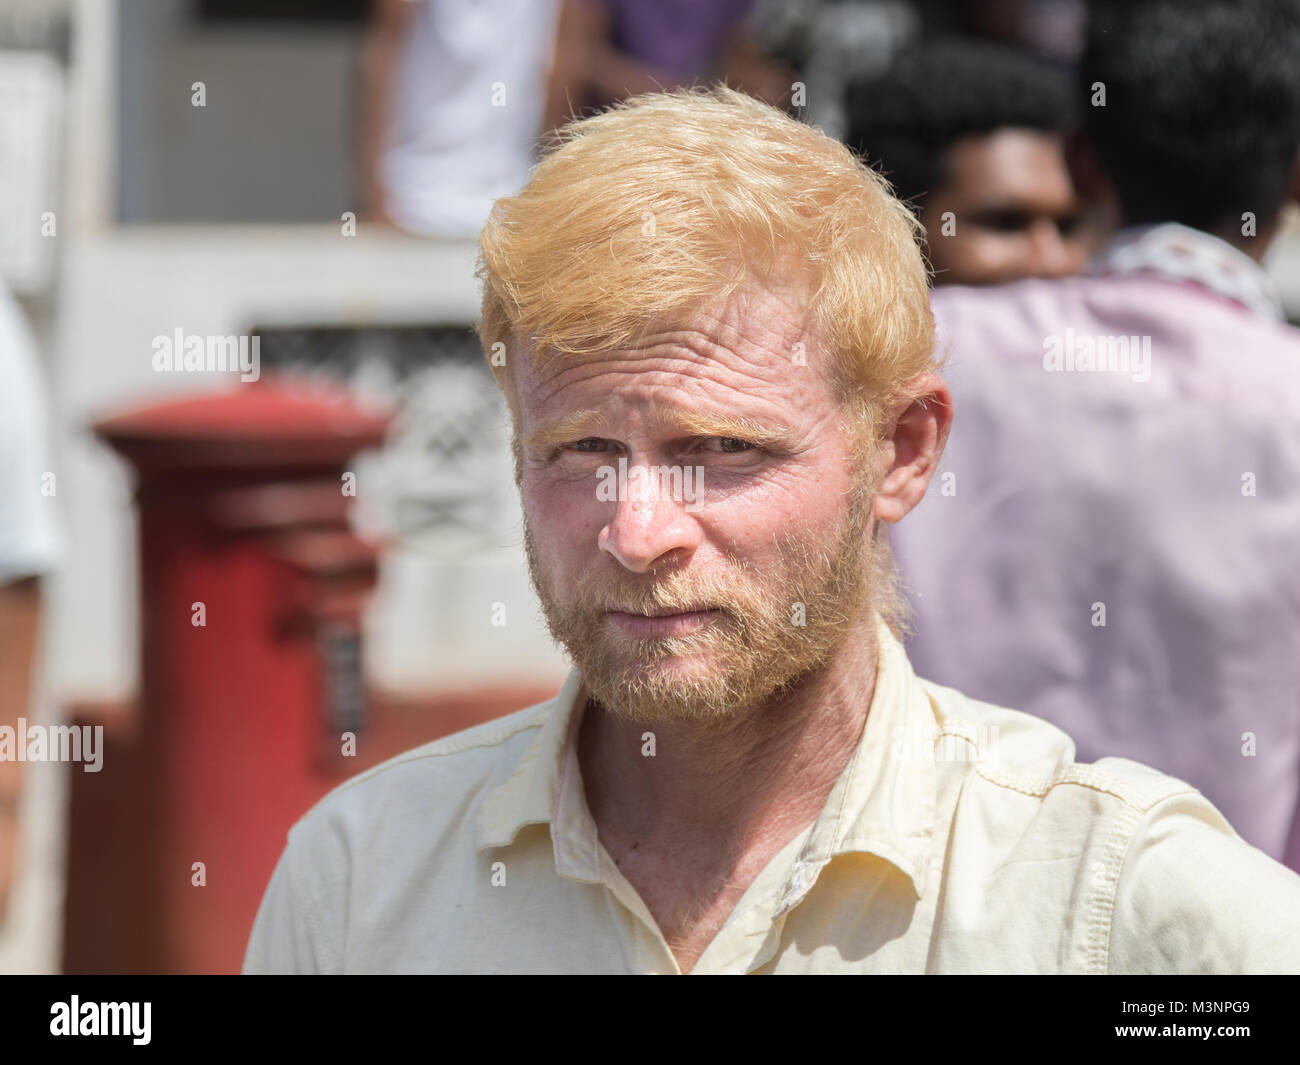 albino-man-indian-hindu-blonde-white-parade-matale-sri-lanka-M3NPG9.jpg